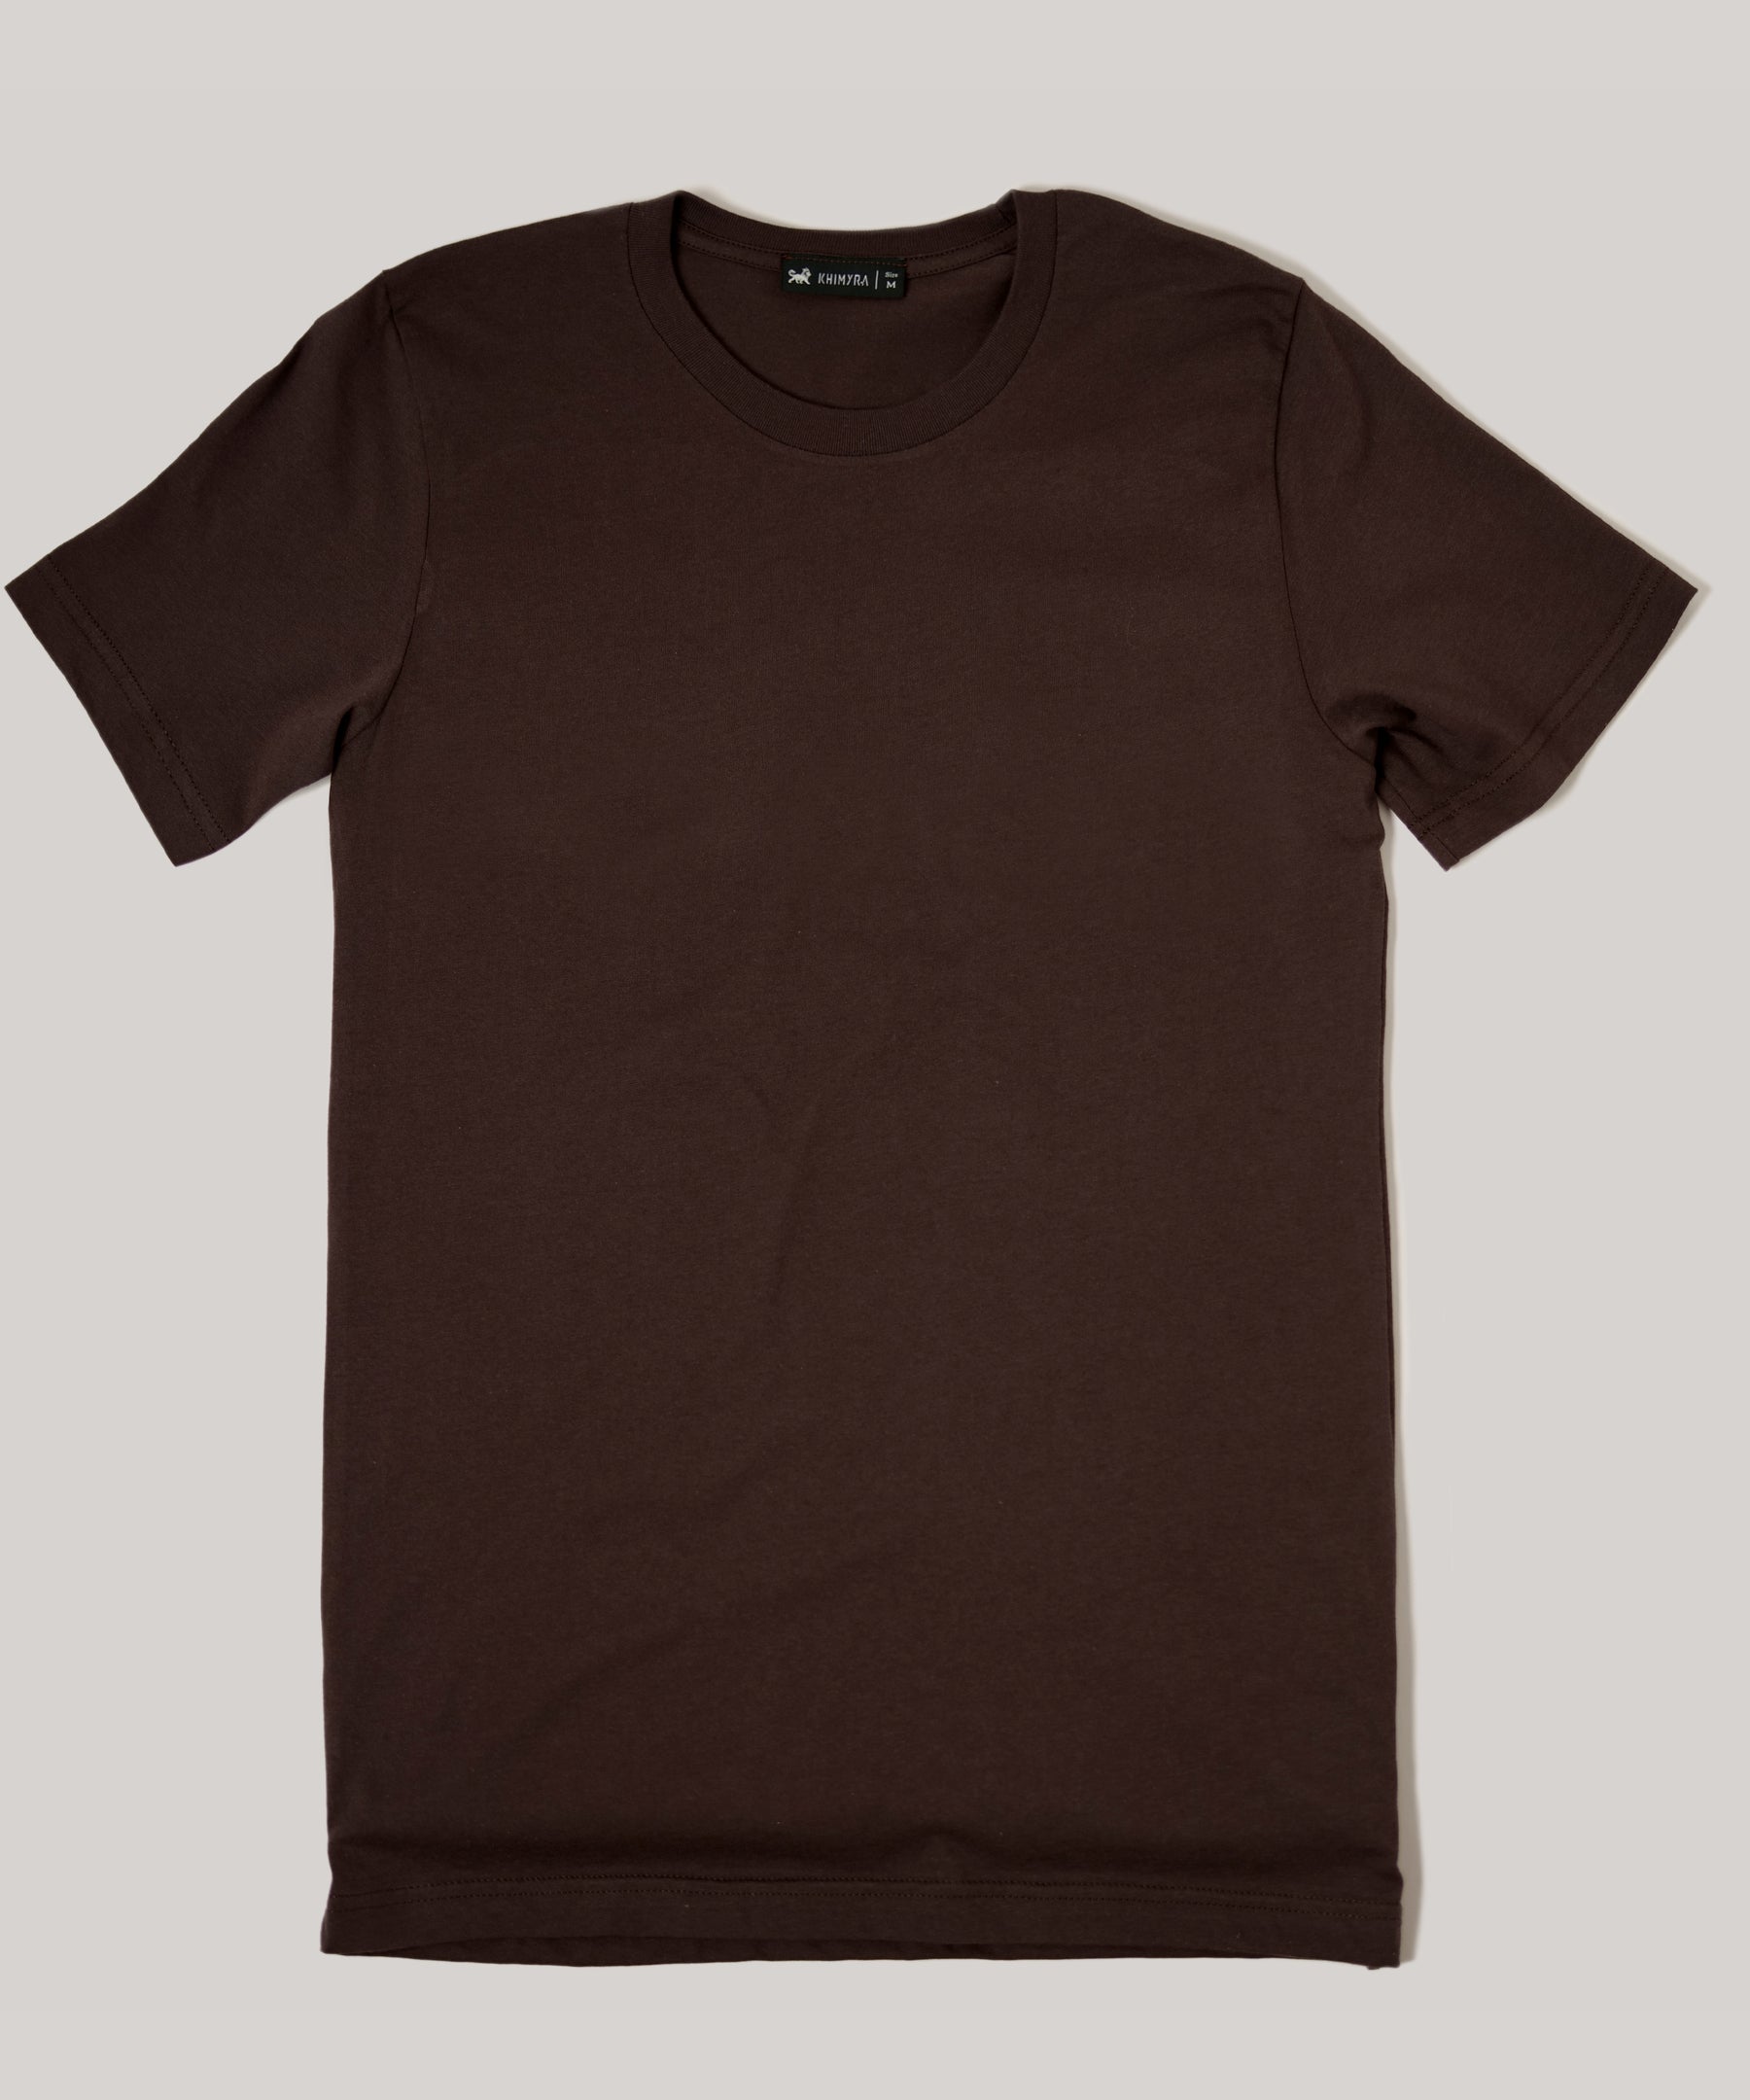 Essential Short Sleeve T-Shirt